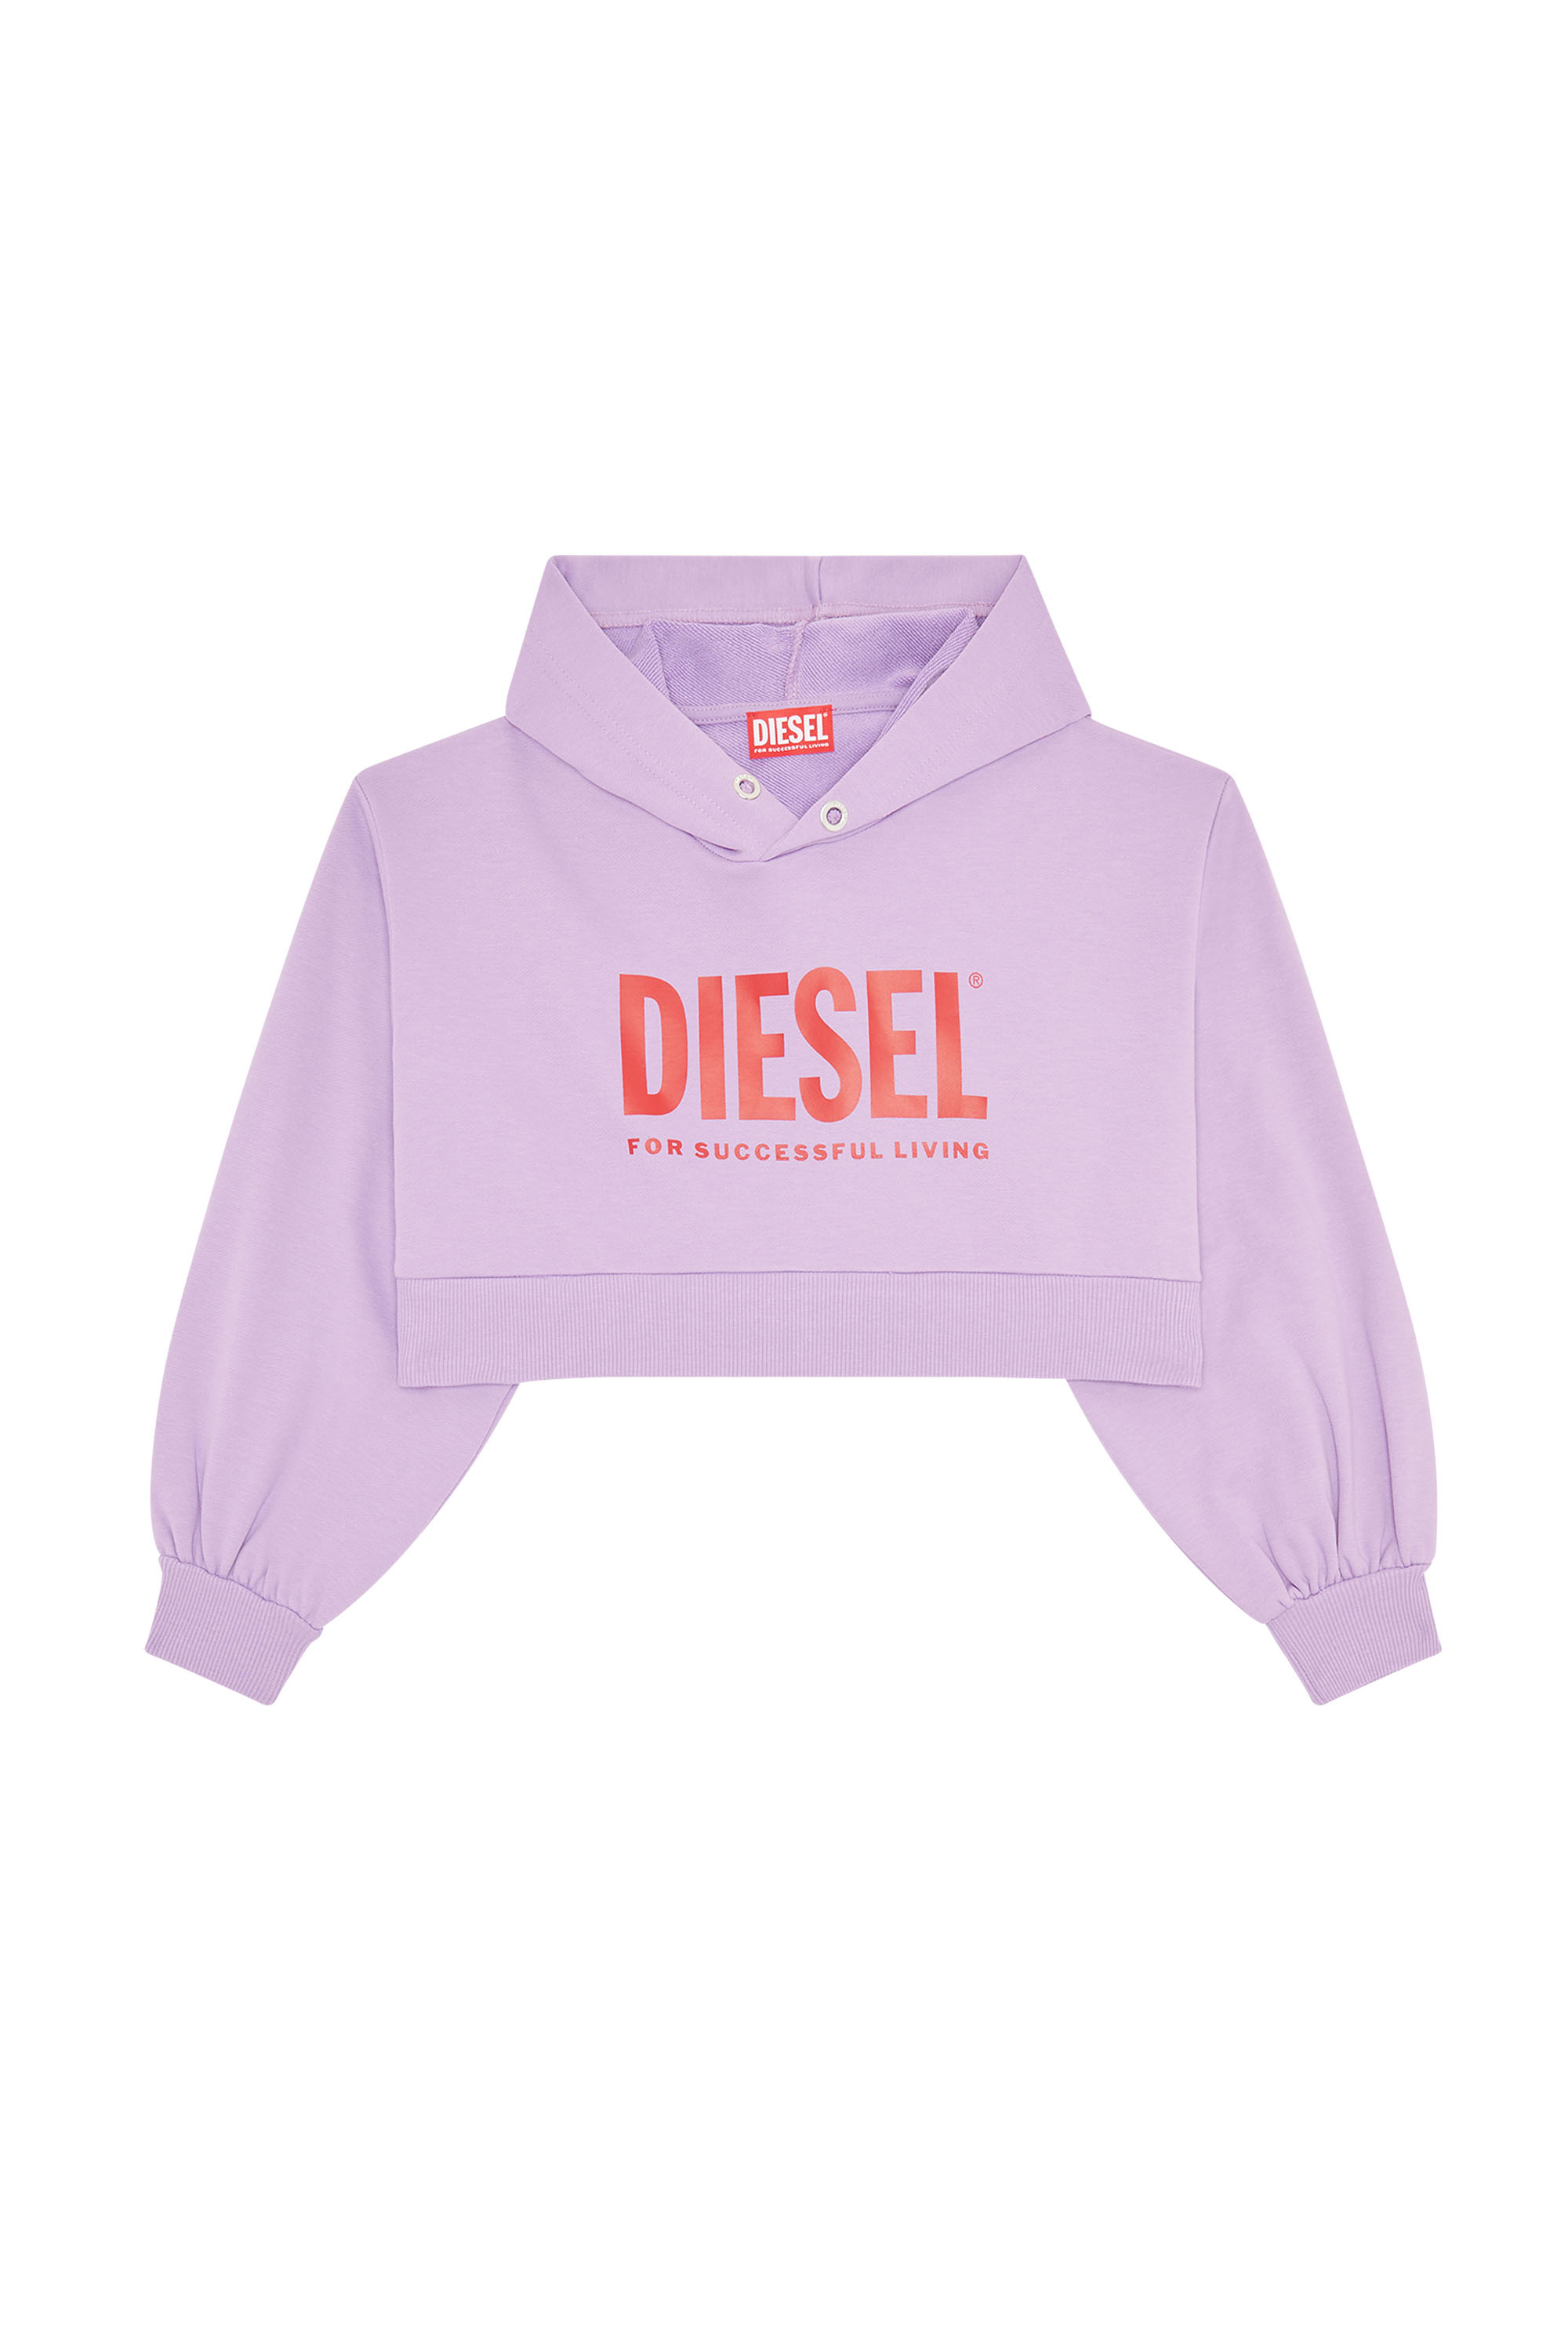 Diesel - SKRALOGO, Lilac - Image 1